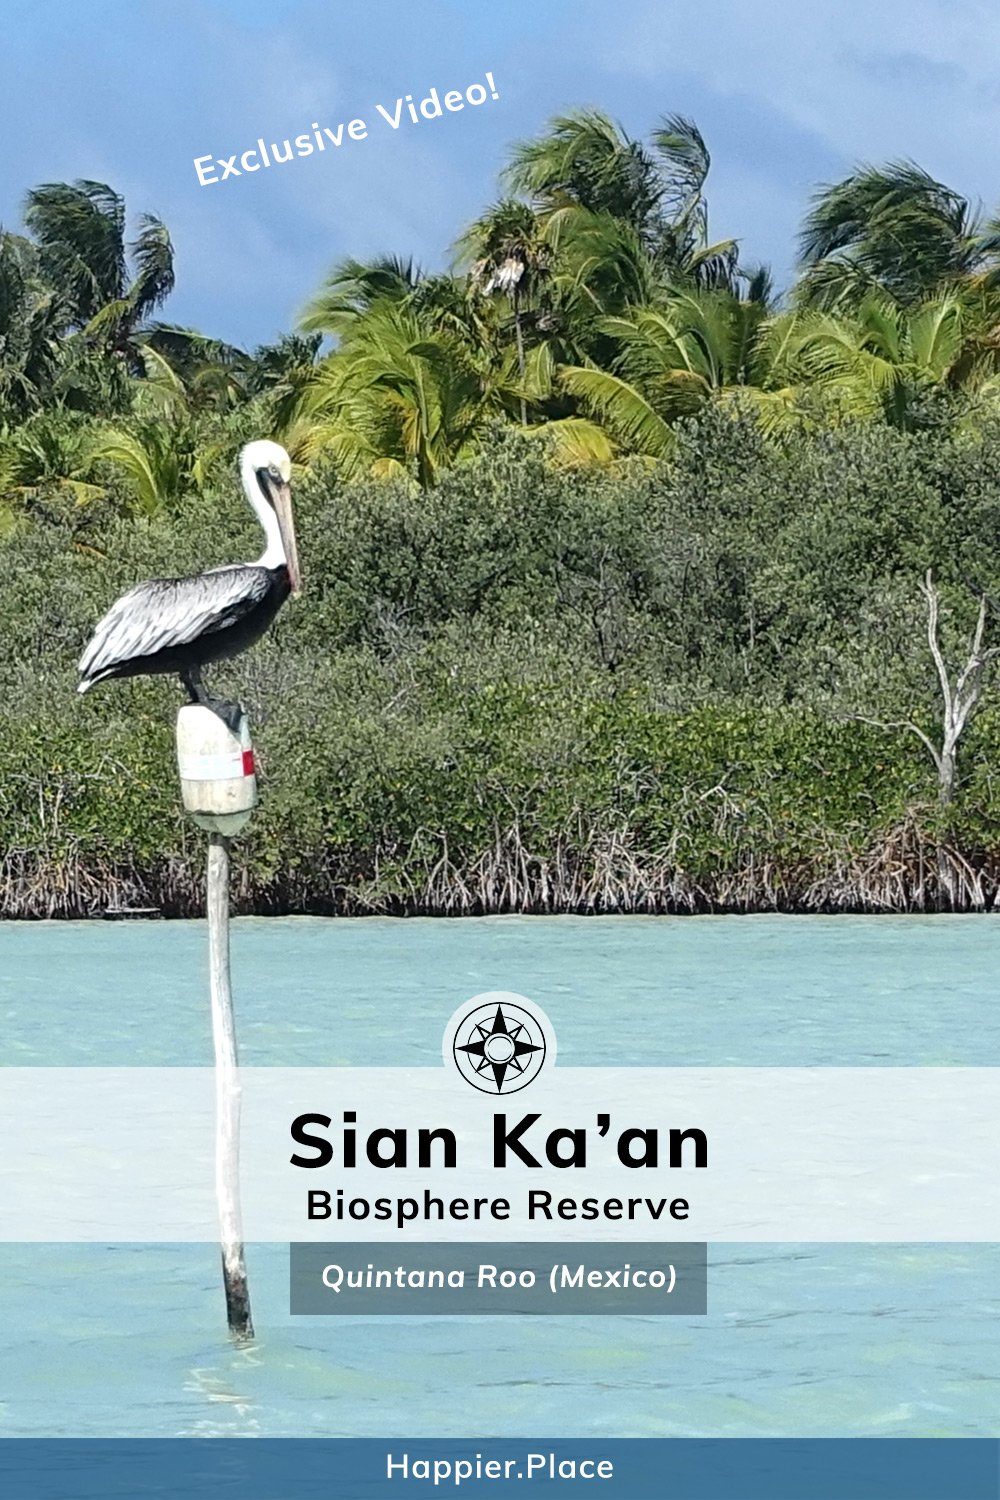 Sian Ka'an Biosphere Reserve, Tulum, Mexico, Quintana Roo, Yucatan Peninsula, Happier Place, pelican, clear water, jungle, video